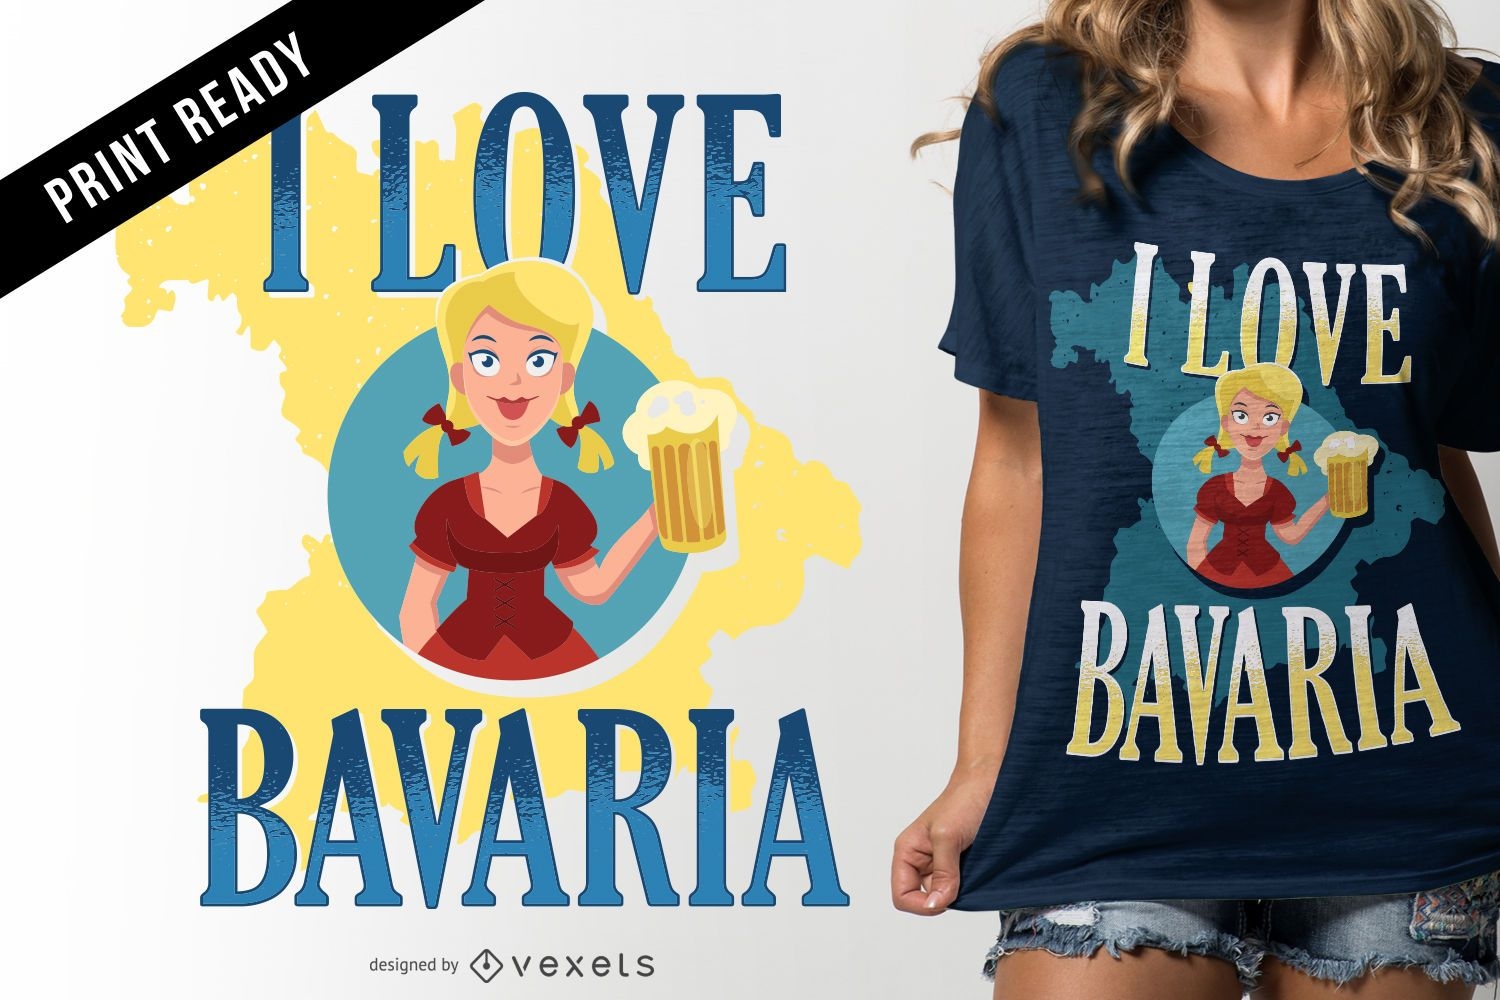 Me encanta el dise?o de camiseta de Bavaria